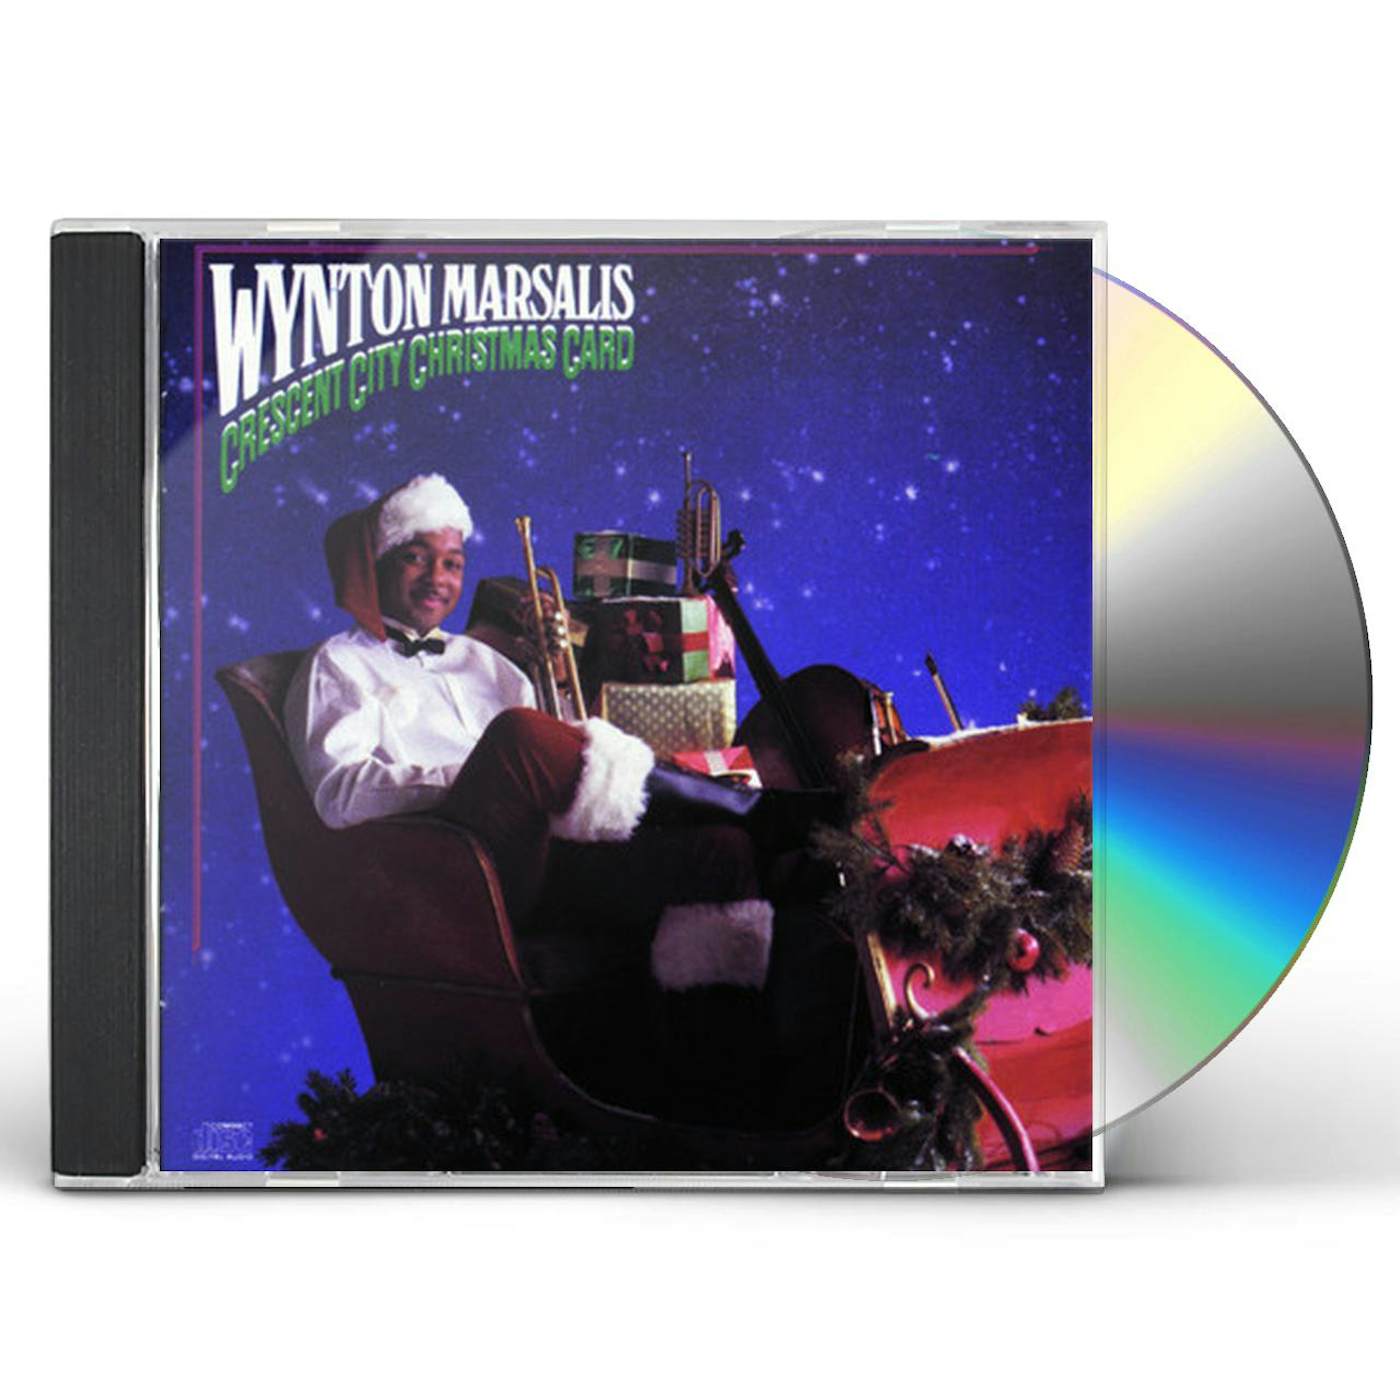 Wynton Marsalis CRESCENT CITY CHRISTMAS CARD CD $15.99$14.49